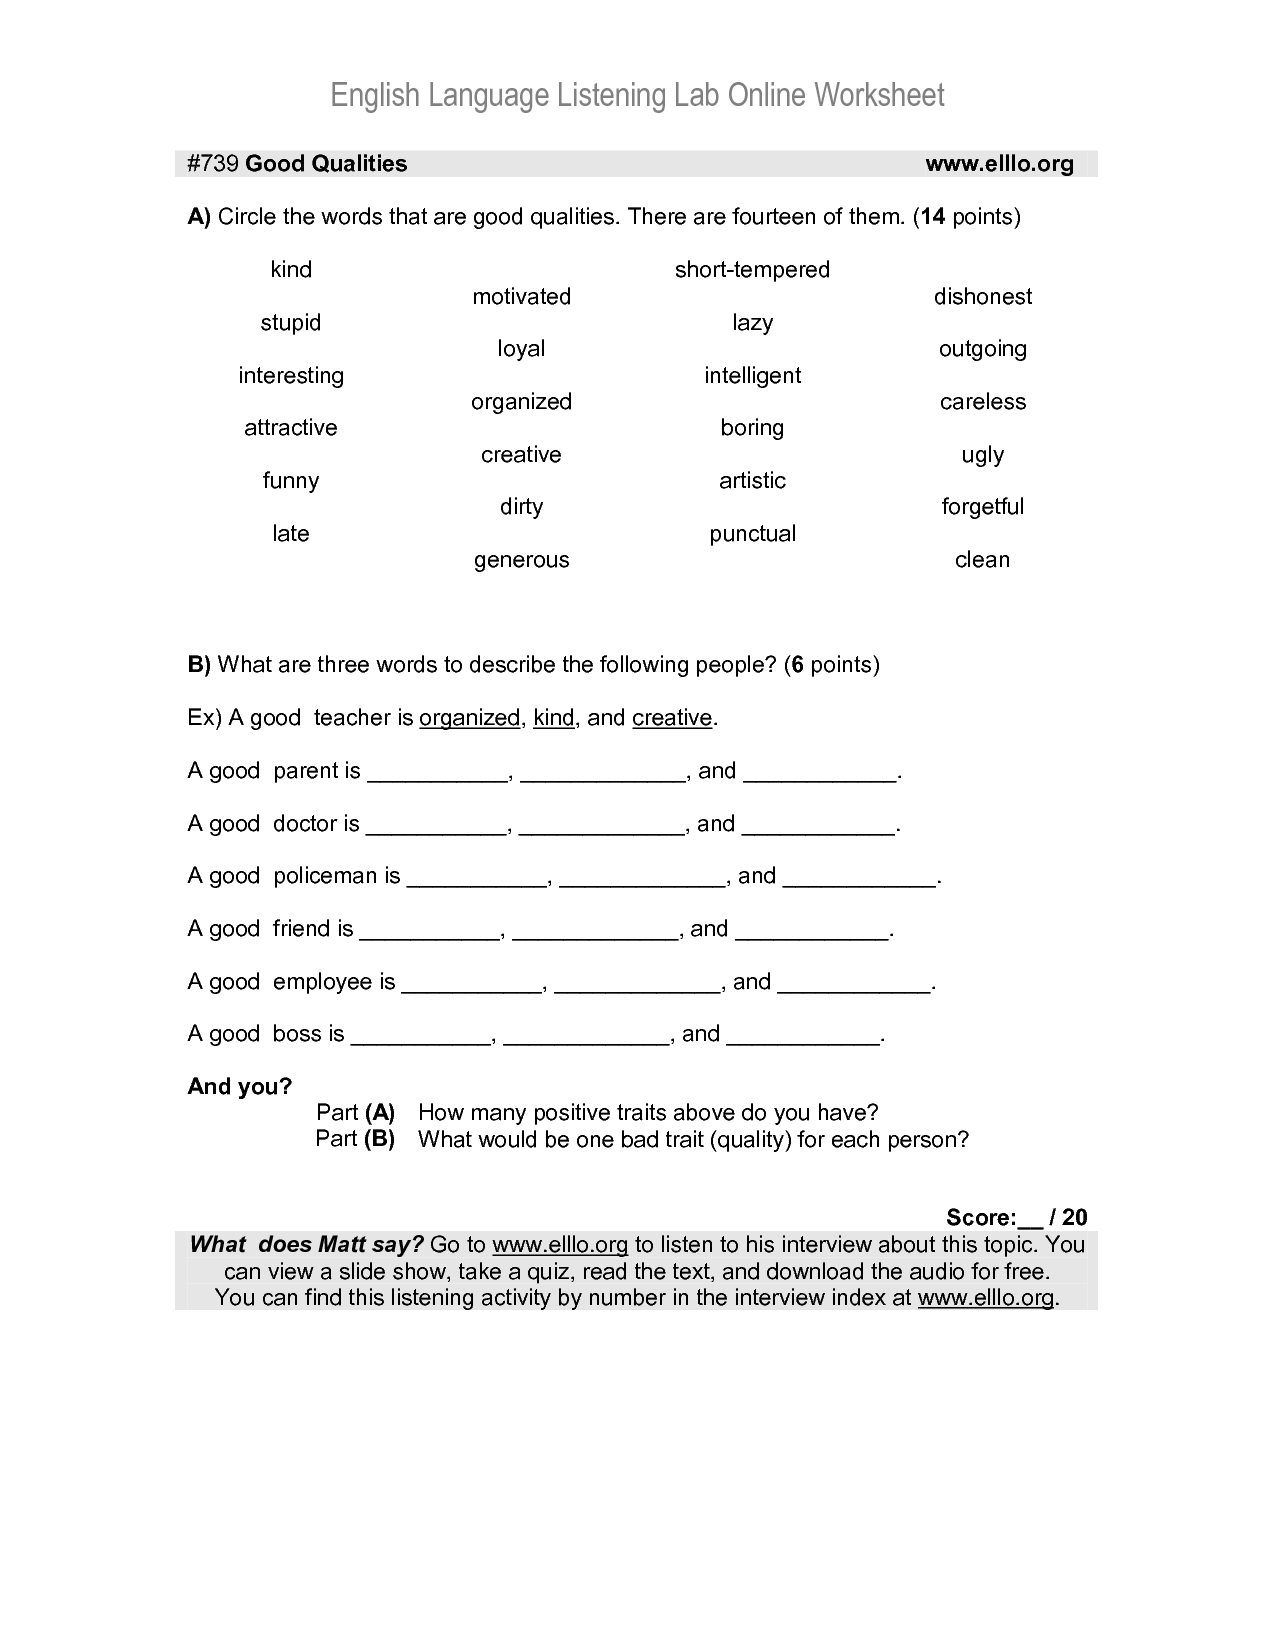 English Language Worksheets Image